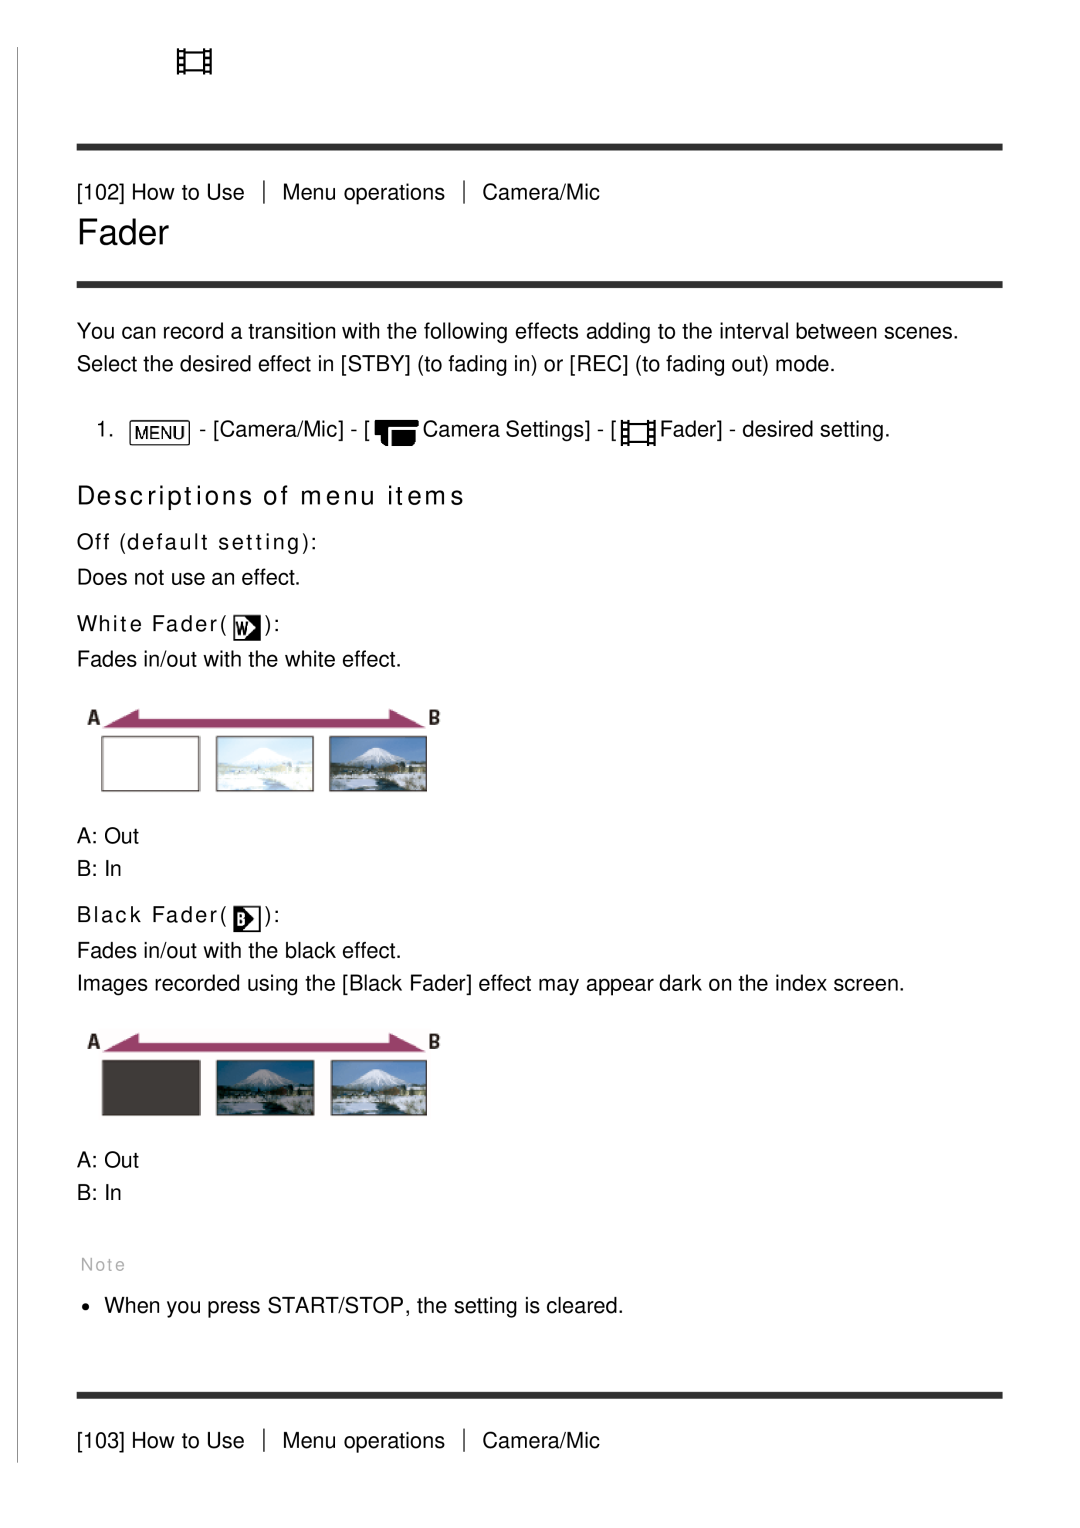 Sony HDR-CX900E, FDR-AX100E manual White Fader, Black Fader, Descriptions of menu items, Off default setting 